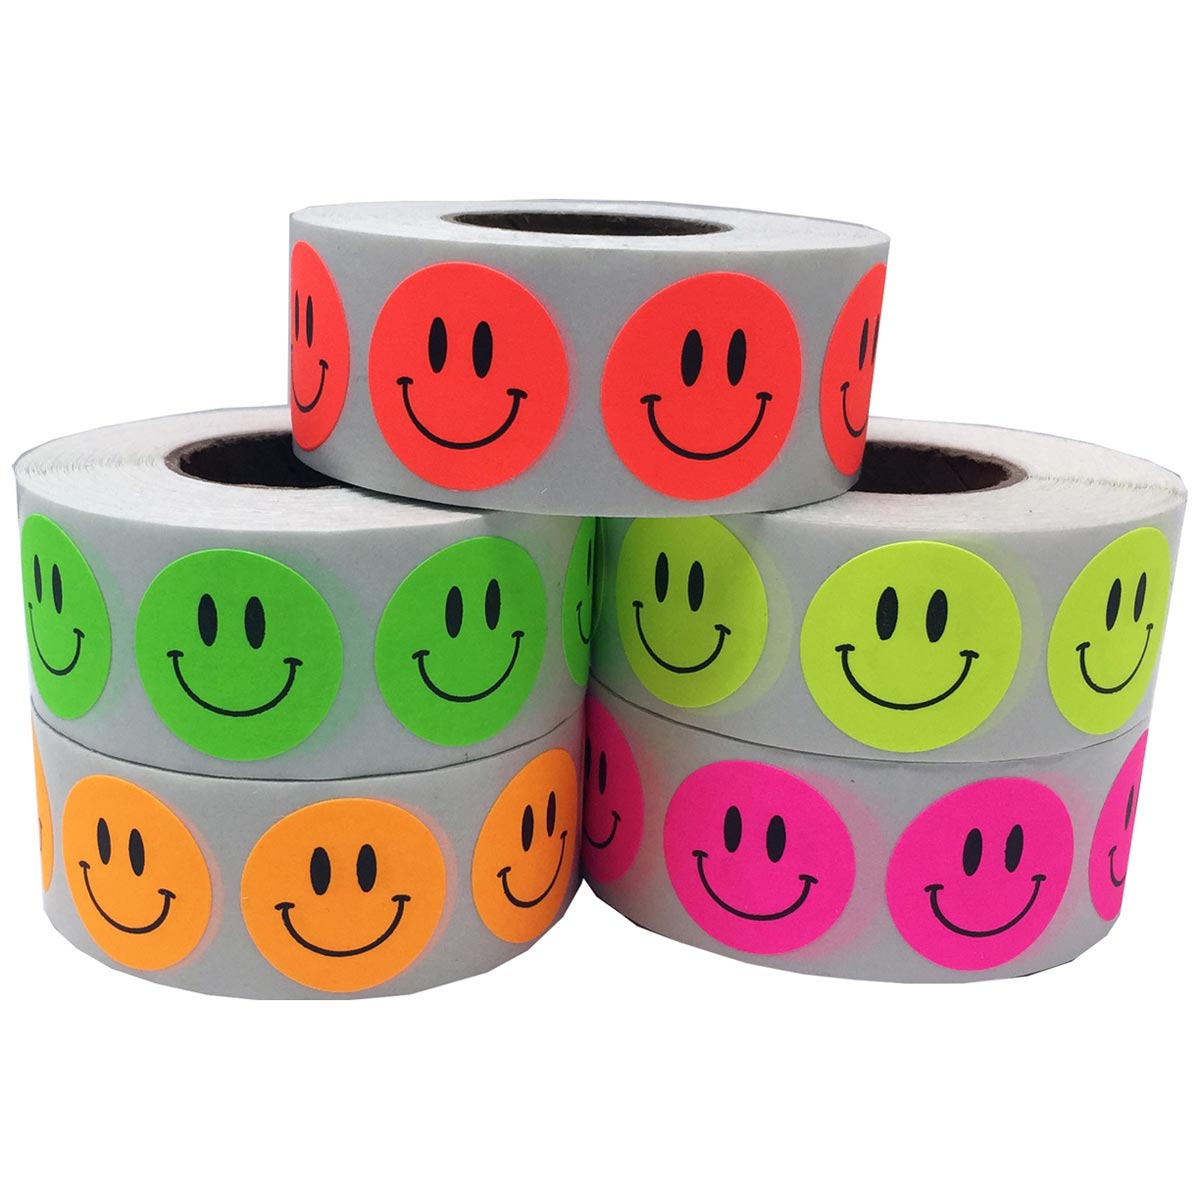  ExpressDecor (3) Smiley face 2x2 Size - Stickers